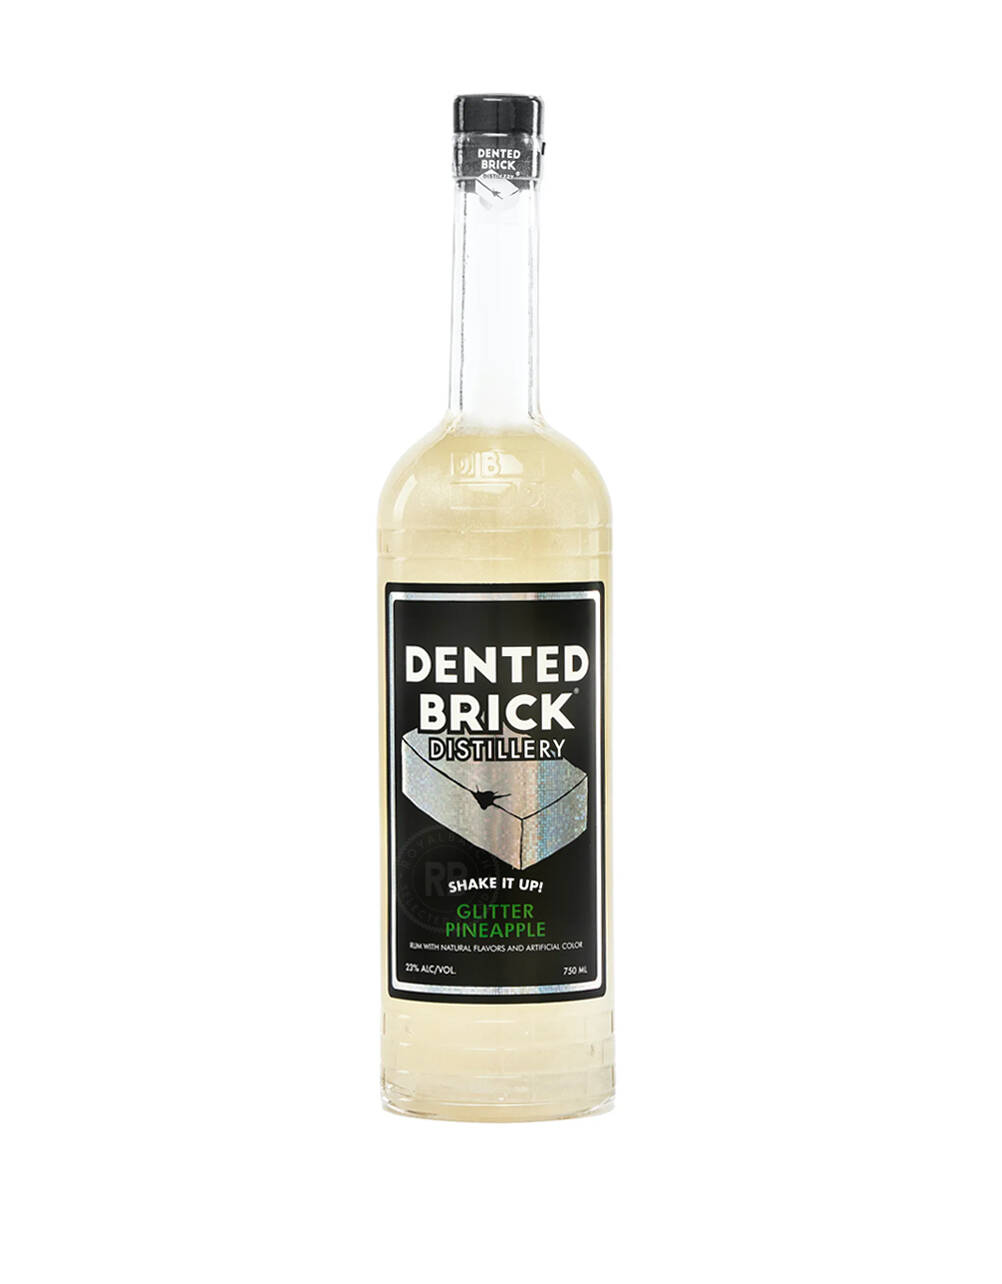 Dented Brick Distillery Glitter Pineapple Rum